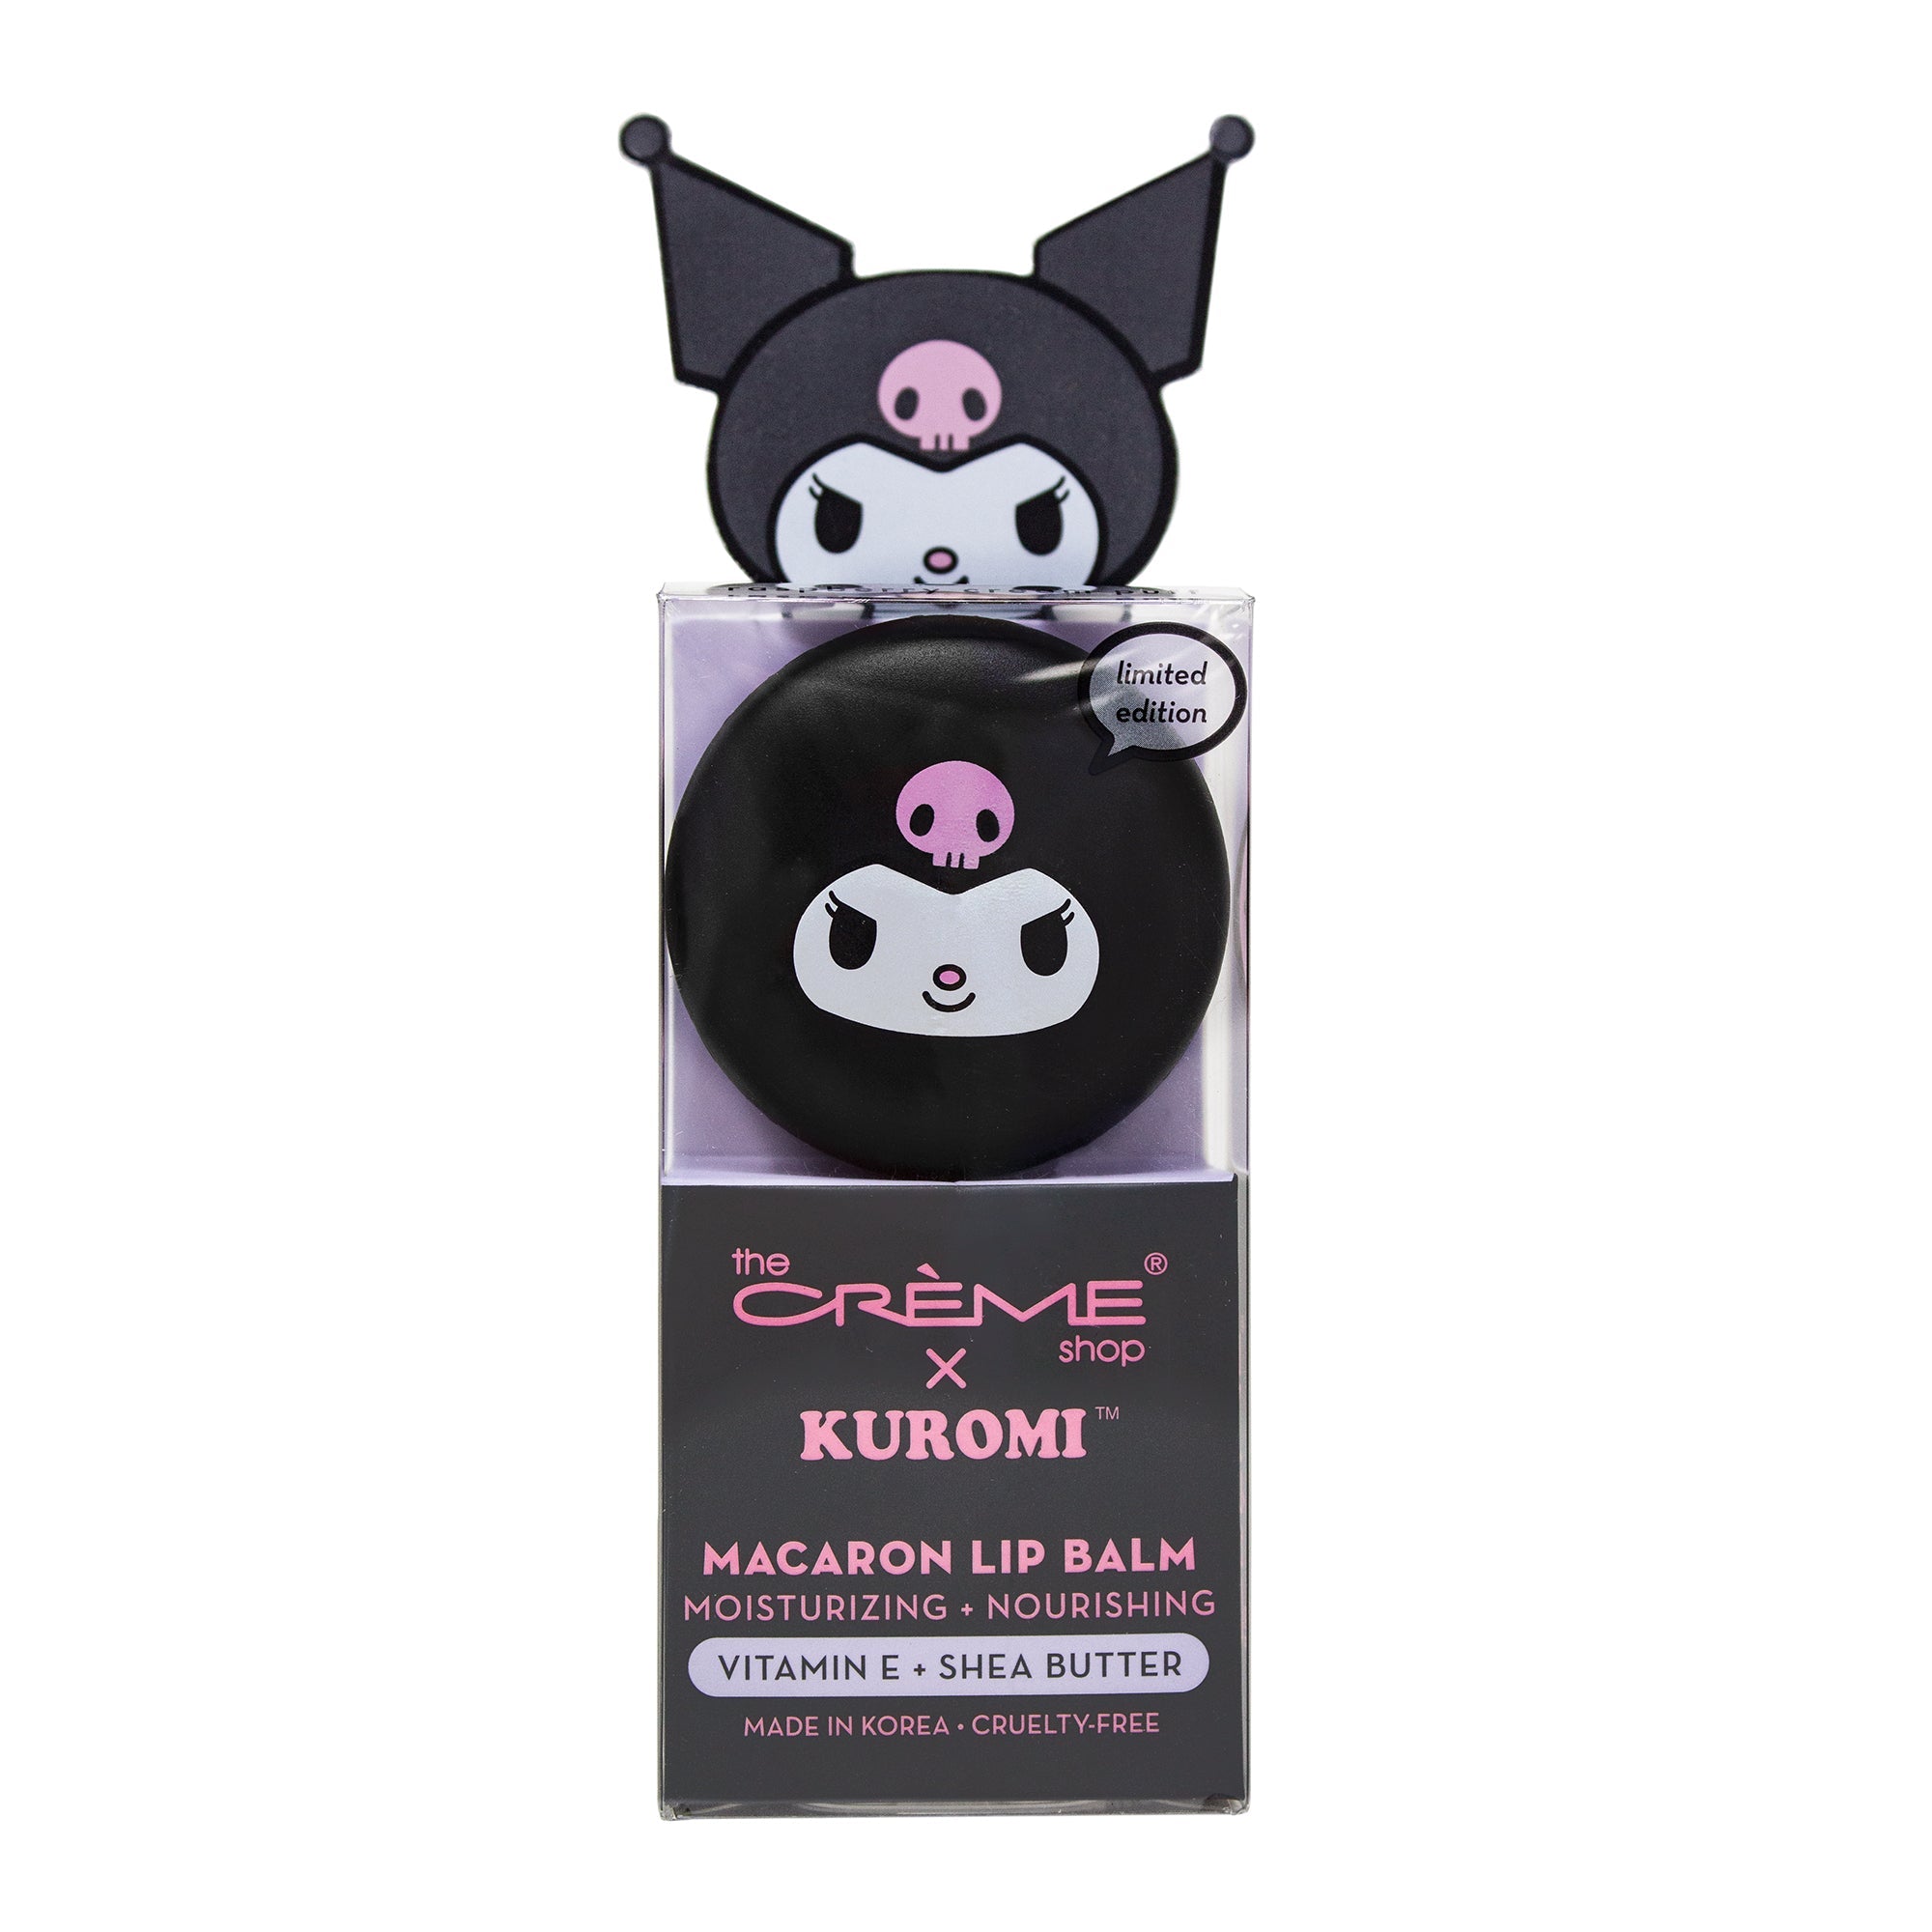 The Crème Shop x Kuromi Macaron Lip Balm - Raspberry Cream Puff Lip Balms The Crème Shop x Sanrio 